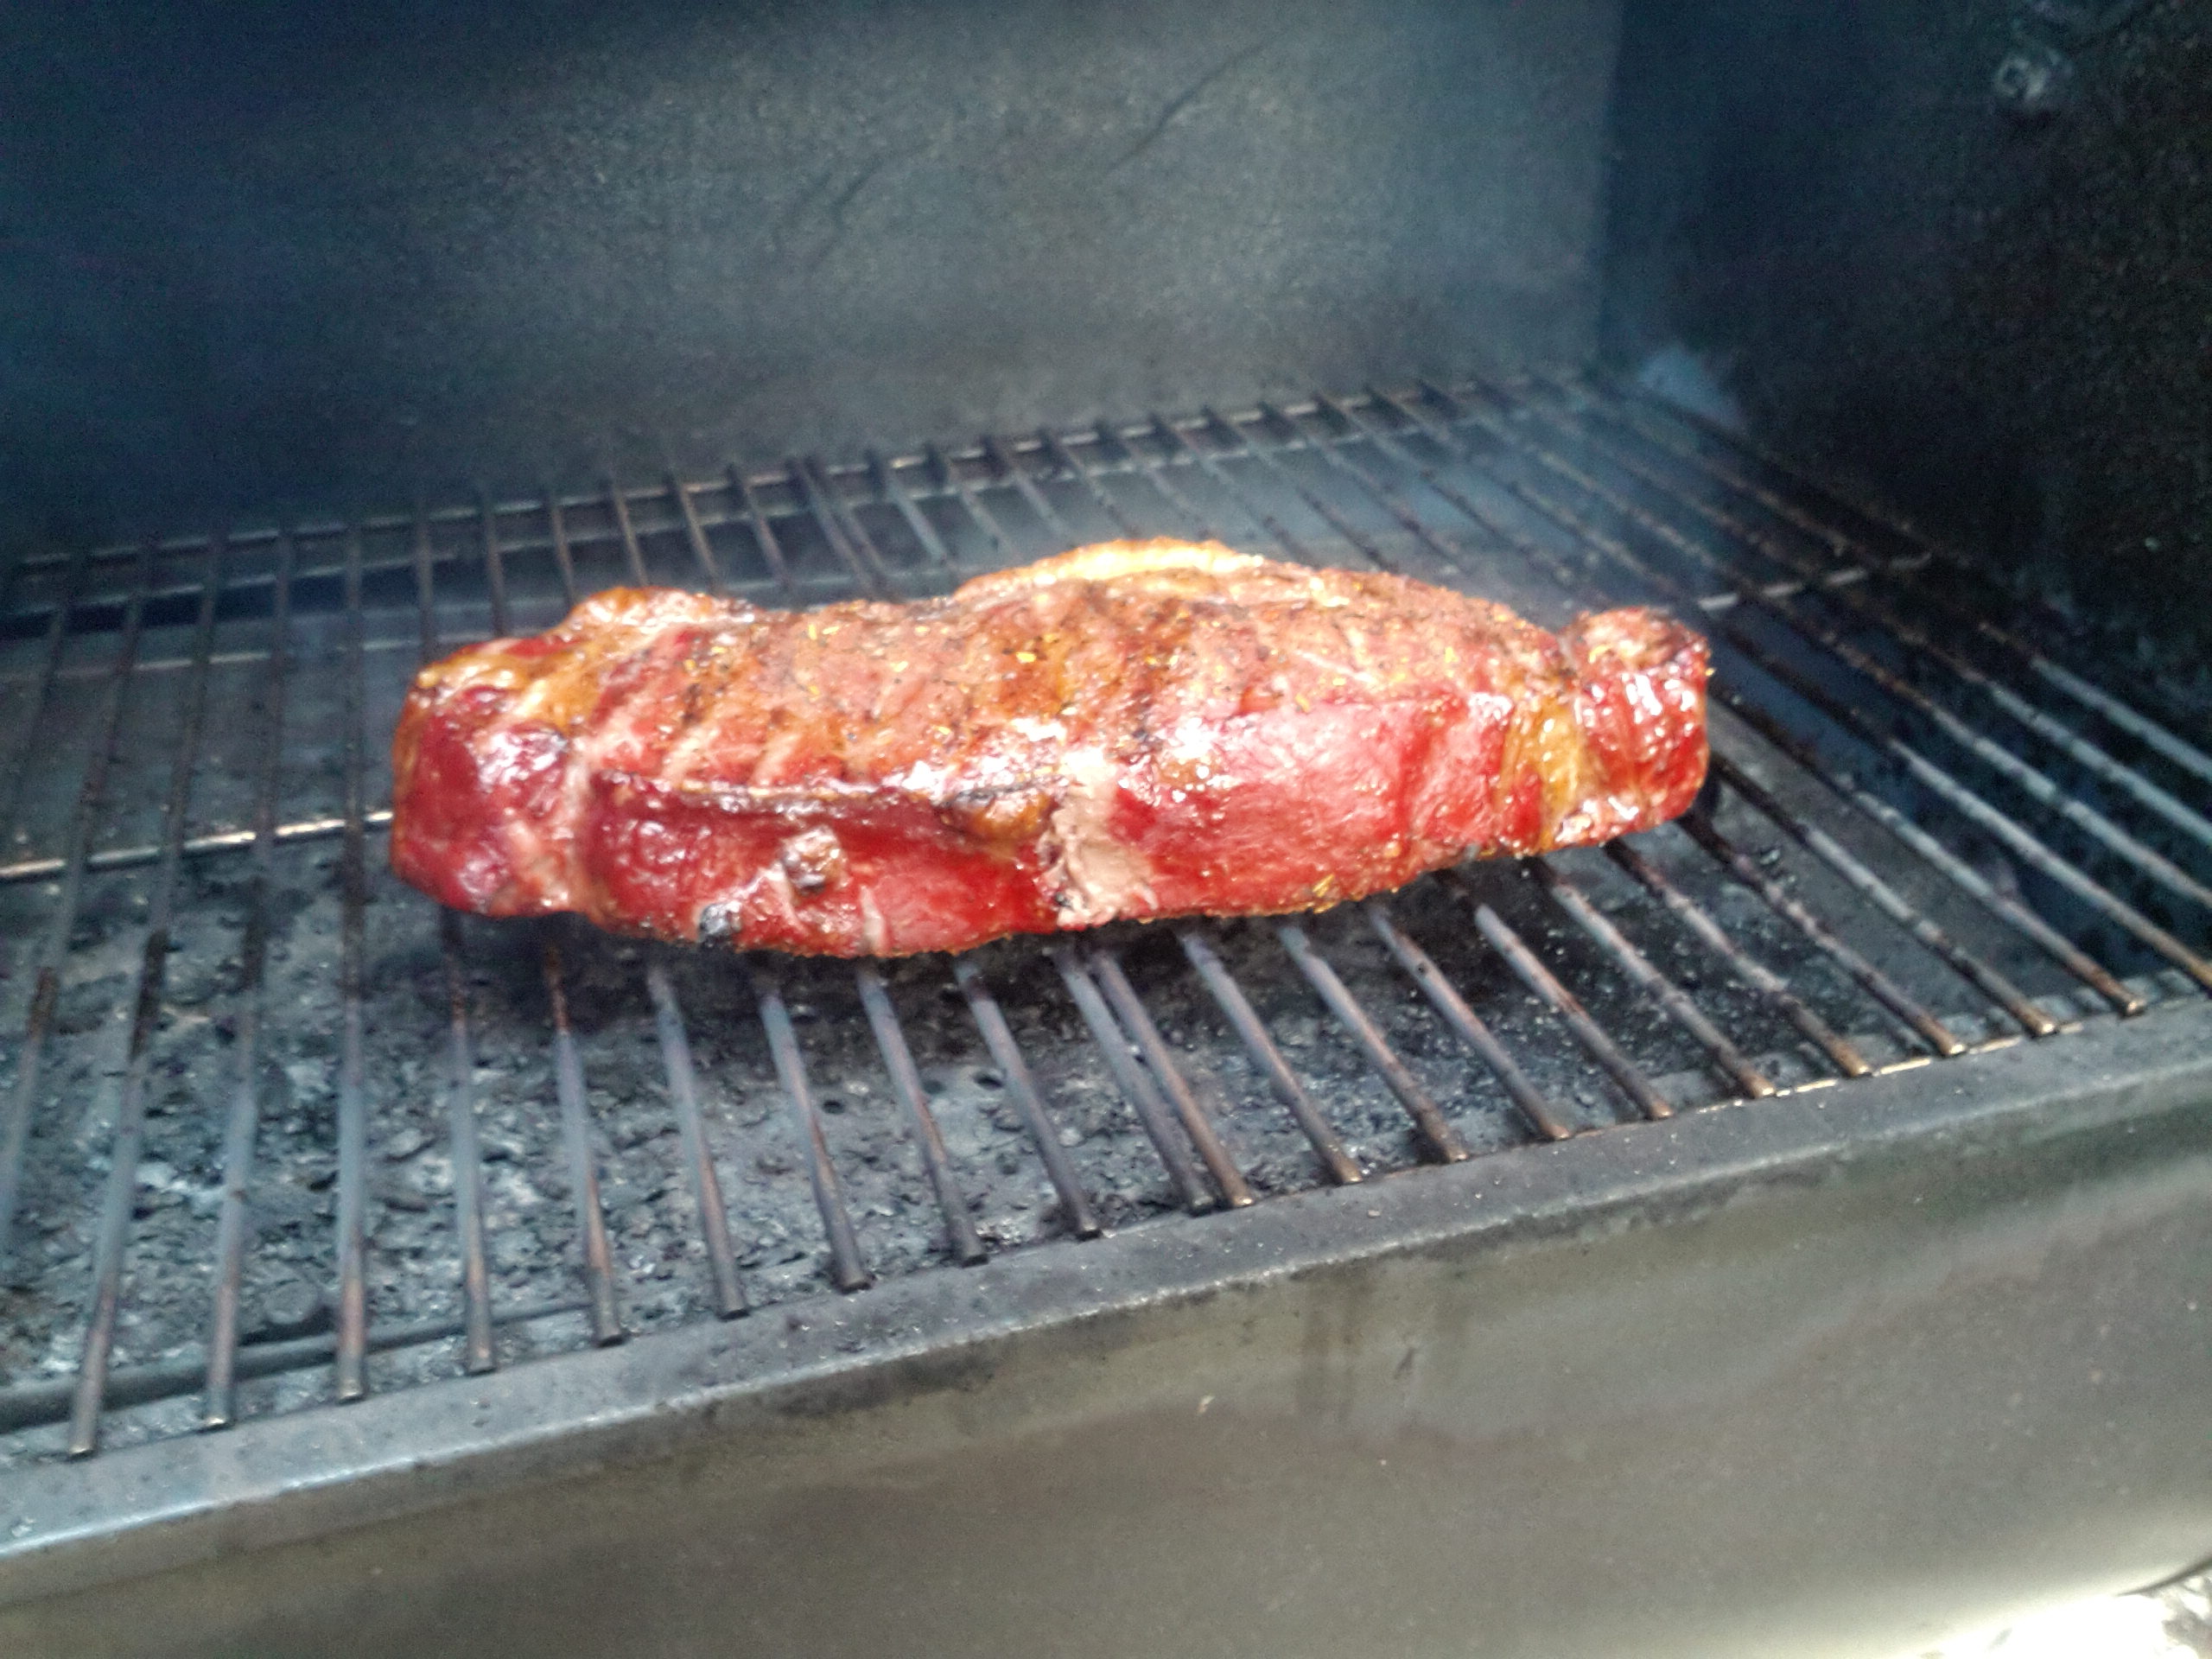 Searing the Steak